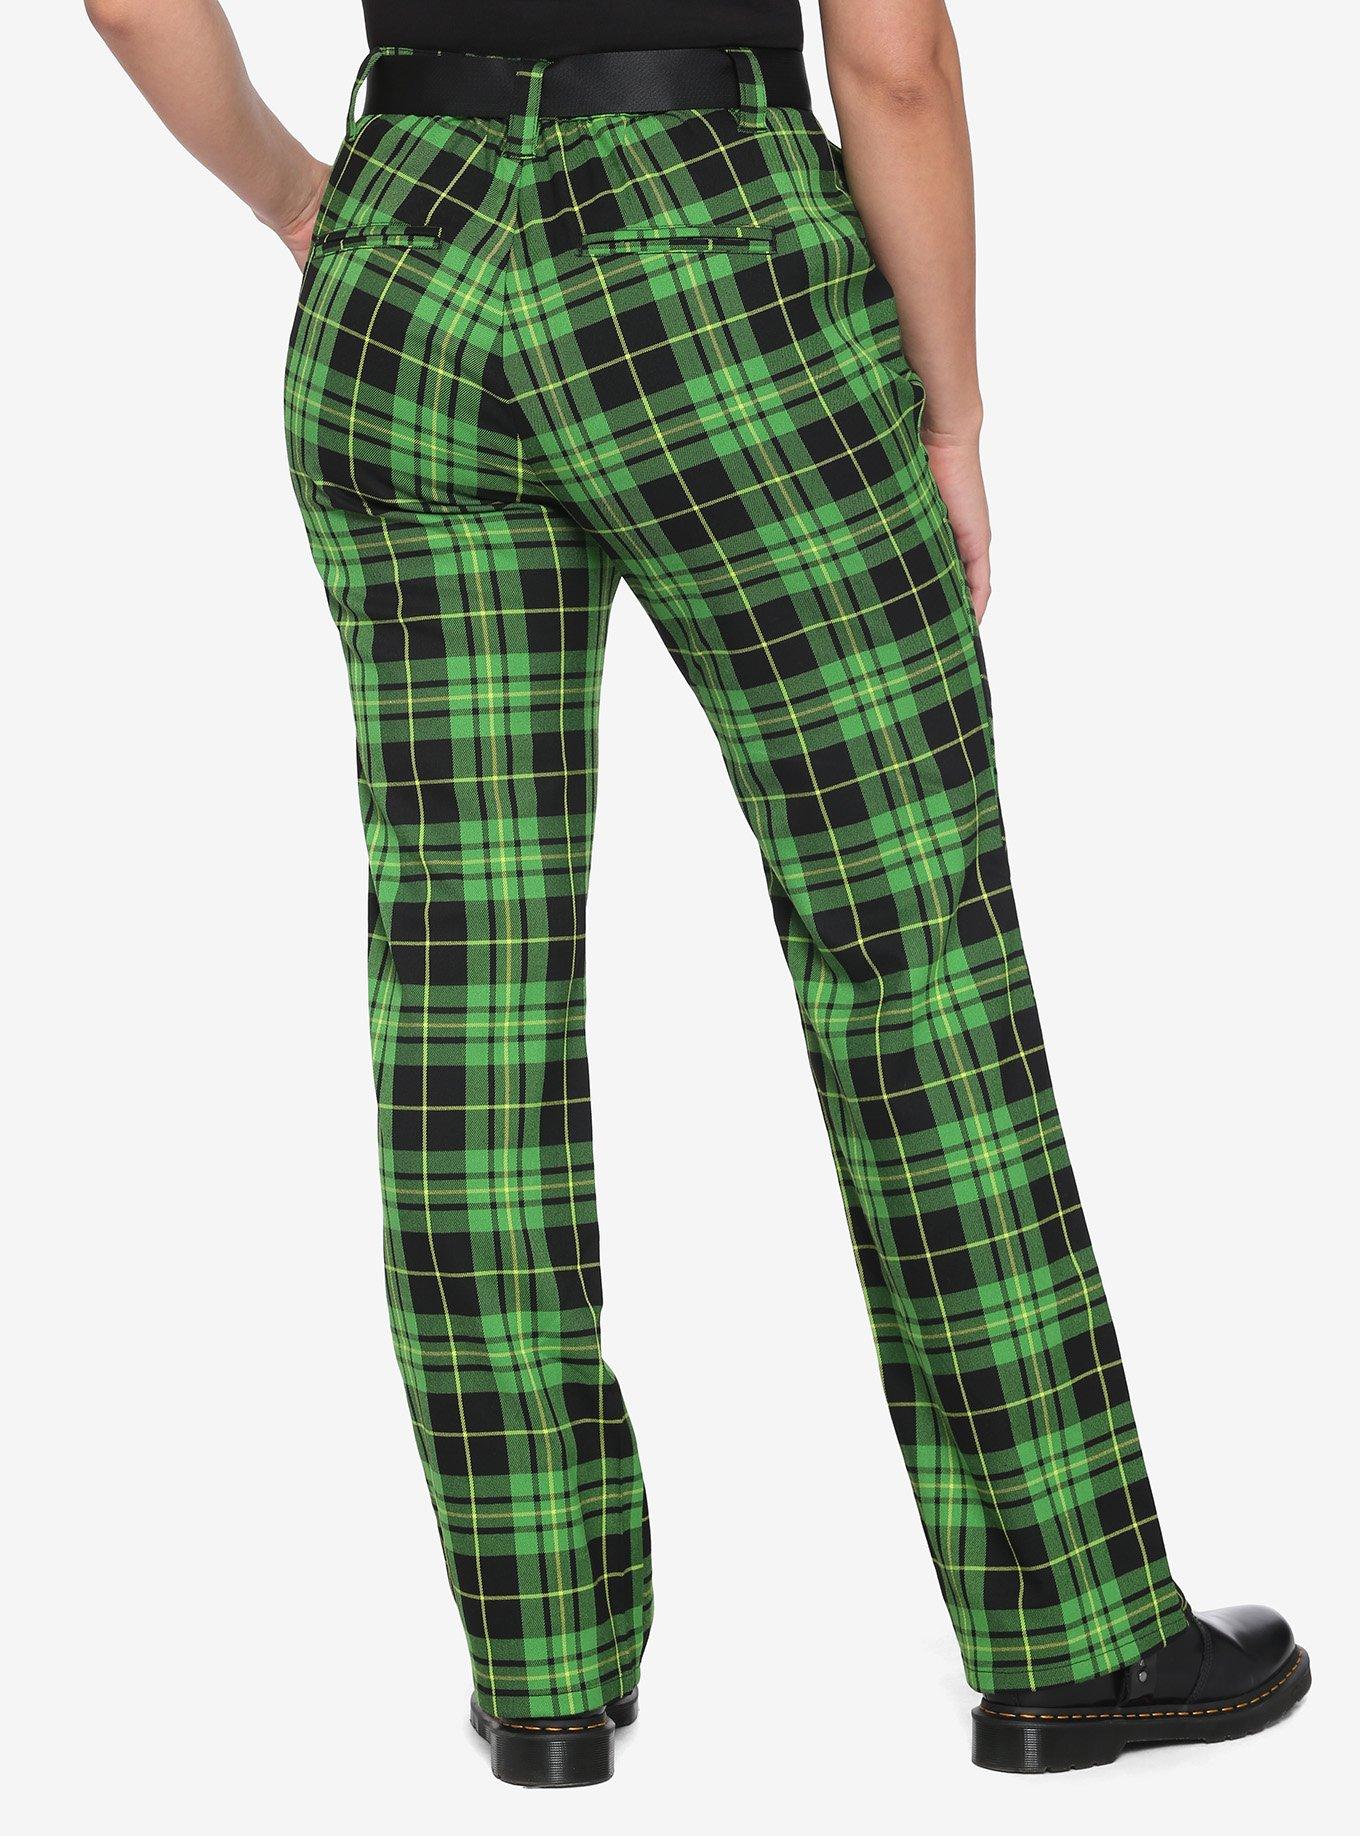 HT Denim Green Plaid Straight-Leg Pants With Buckle Belt, PLAID, alternate